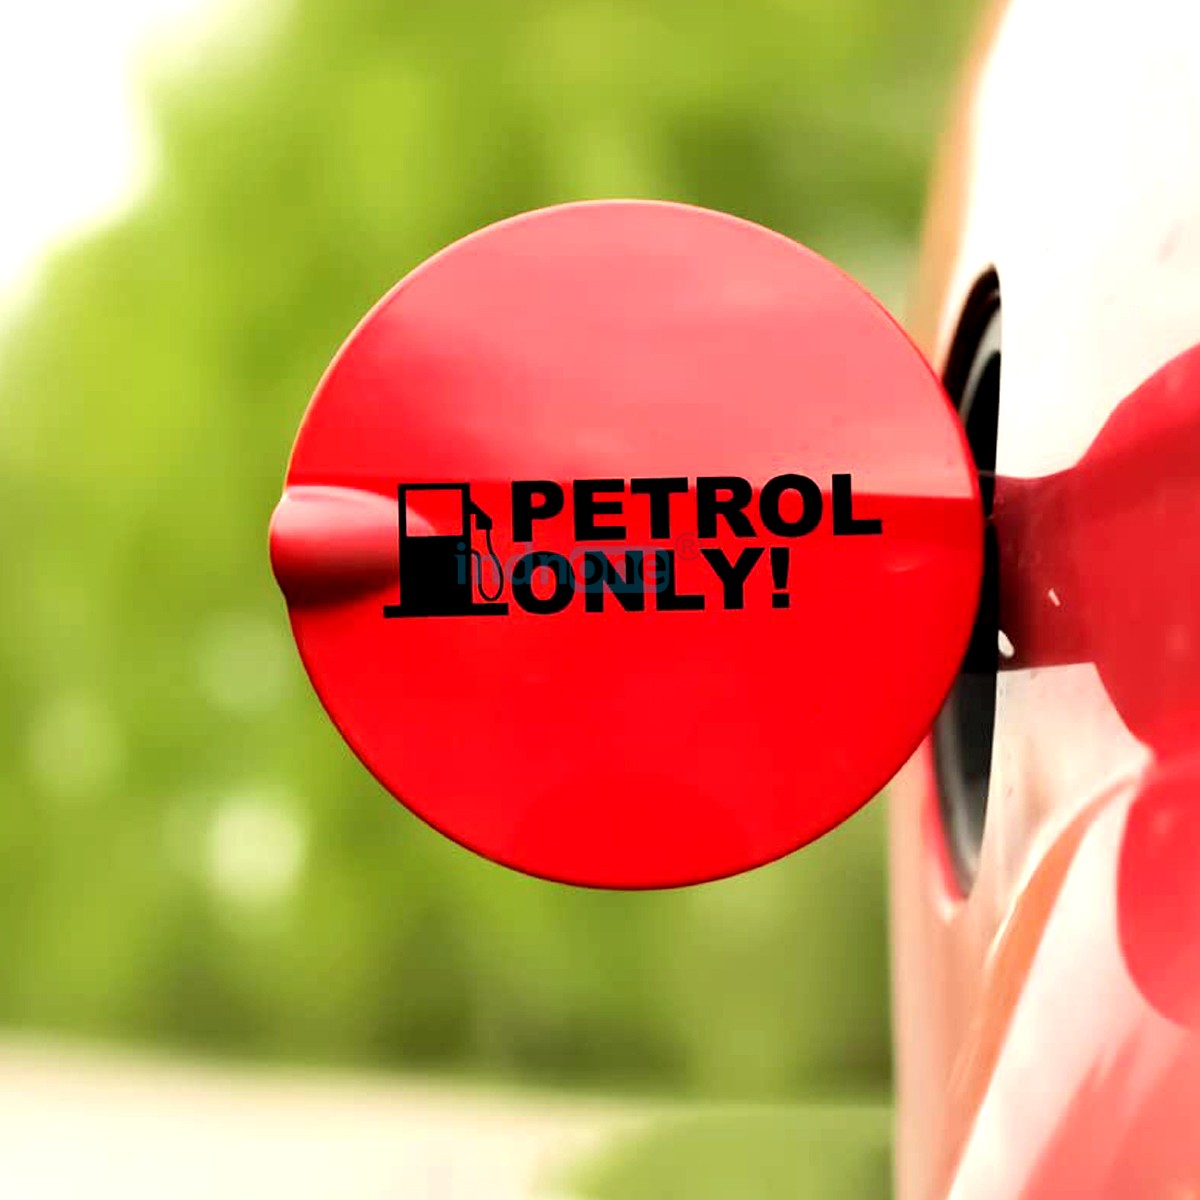 indnone®  Petrol Only Logo Sticker for Car. Car Sticker Stylish Fuel Lid | Black Color Standard Size